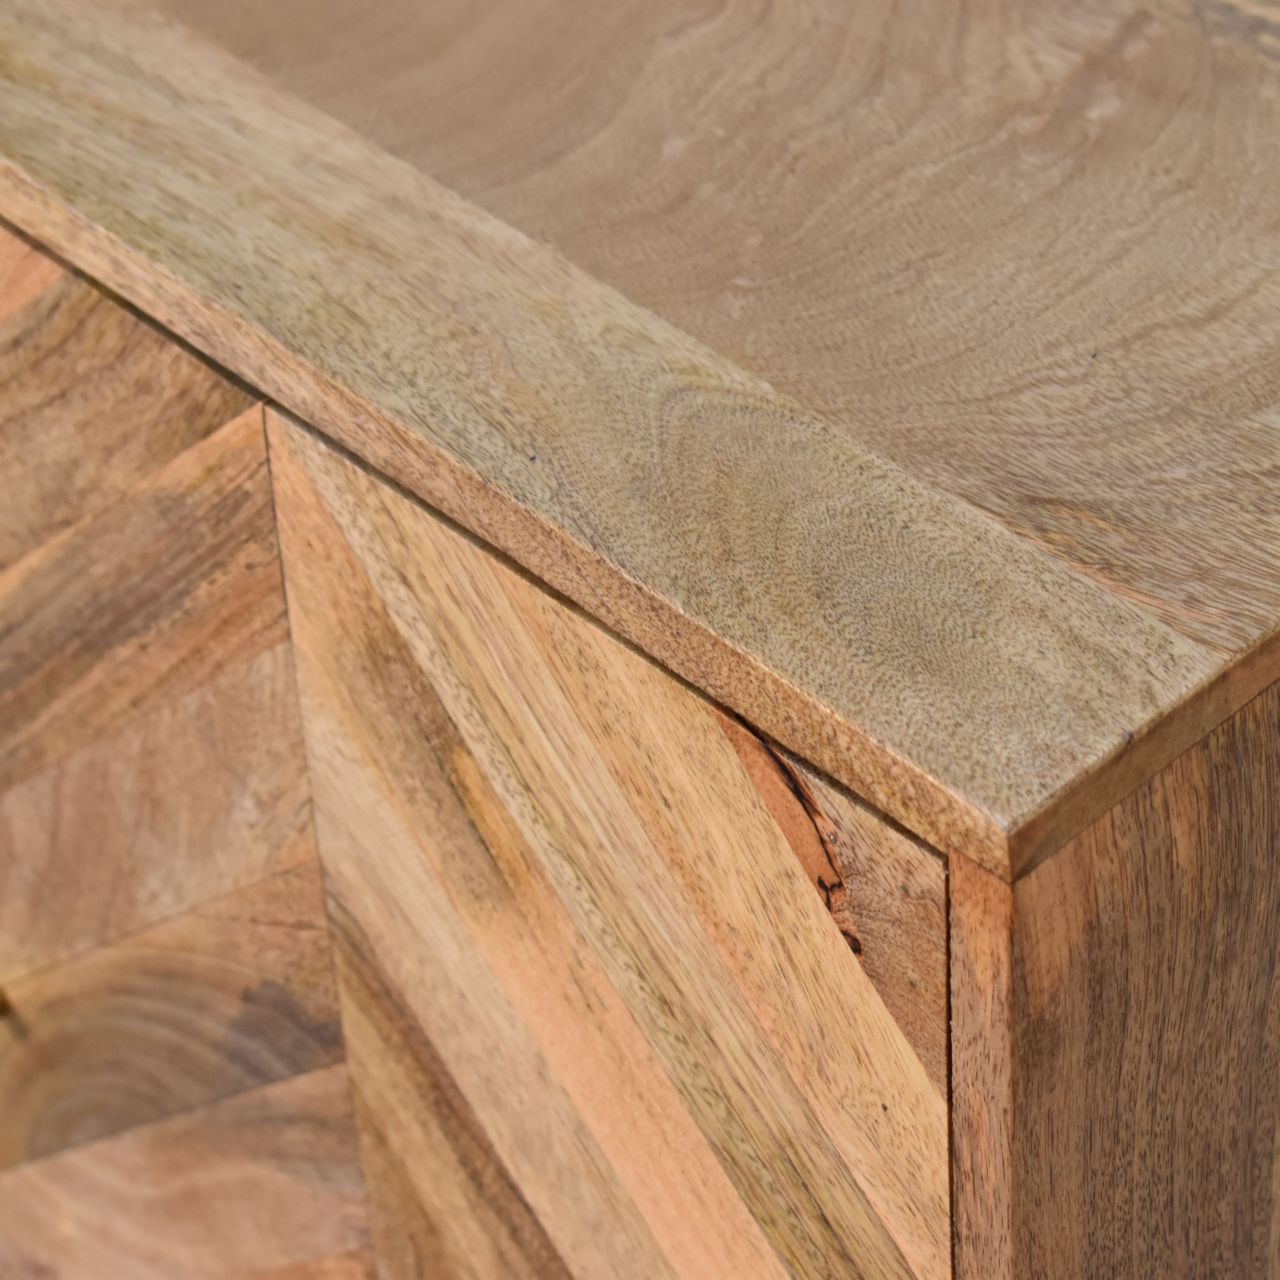 Muna Solid Wood Cabinet